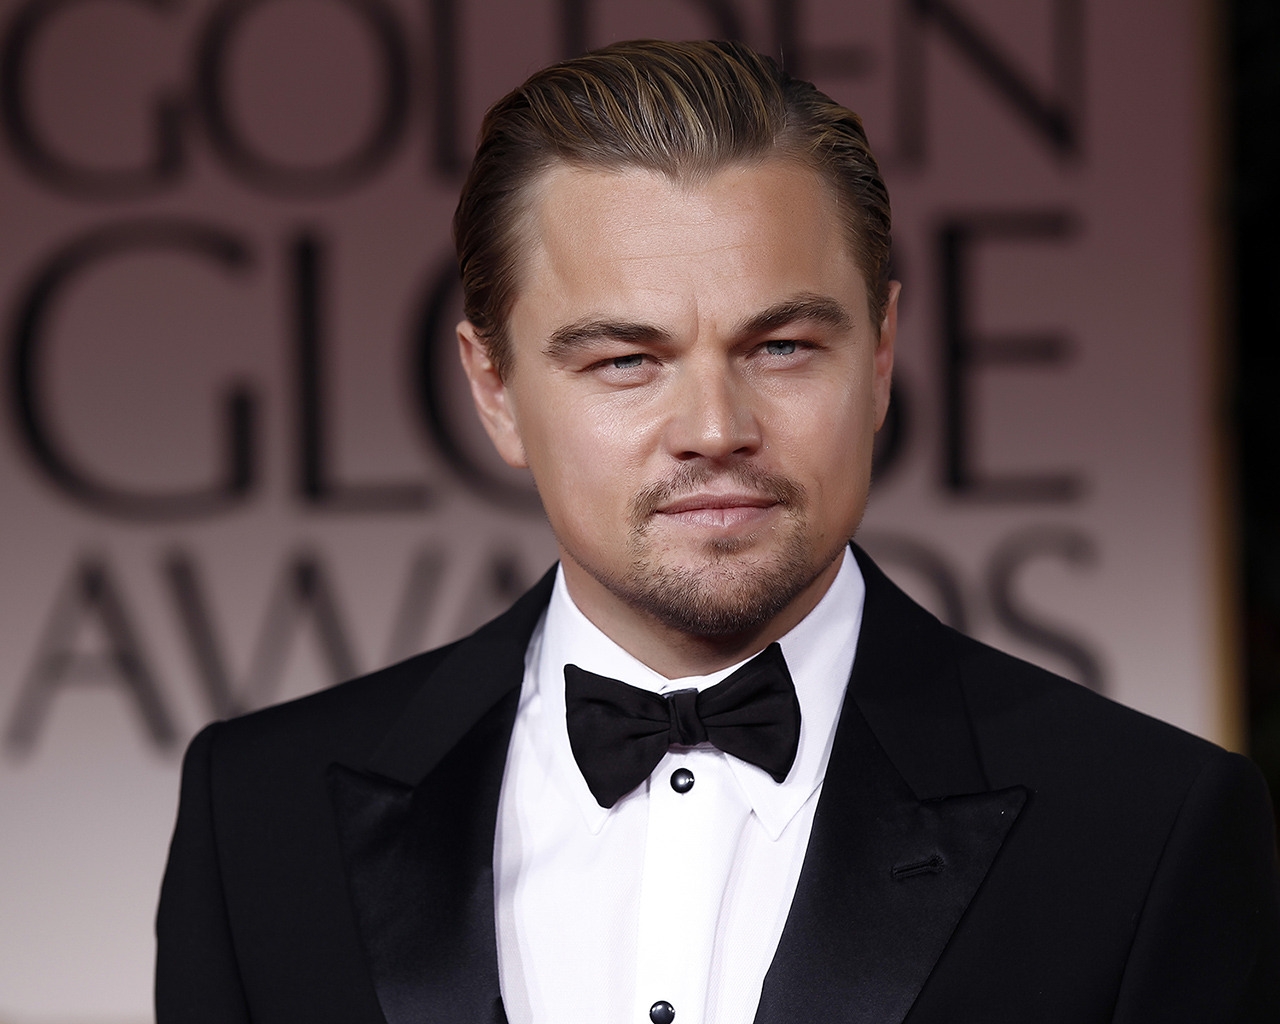 Leonardo DiCaprio in Tuxedo for 1280 x 1024 resolution